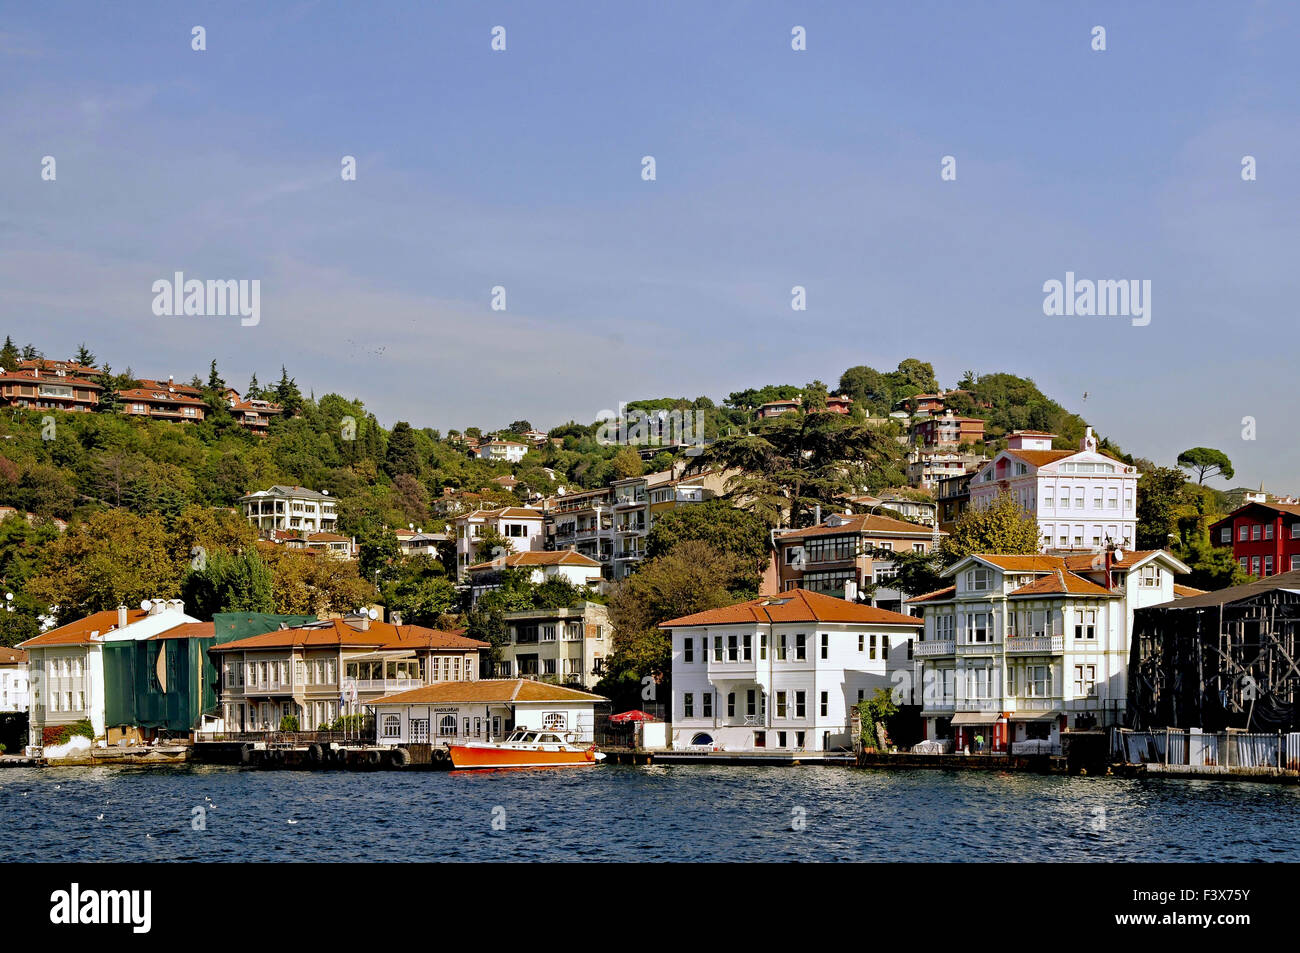 Cruise on the Bosphorus Stock Photo